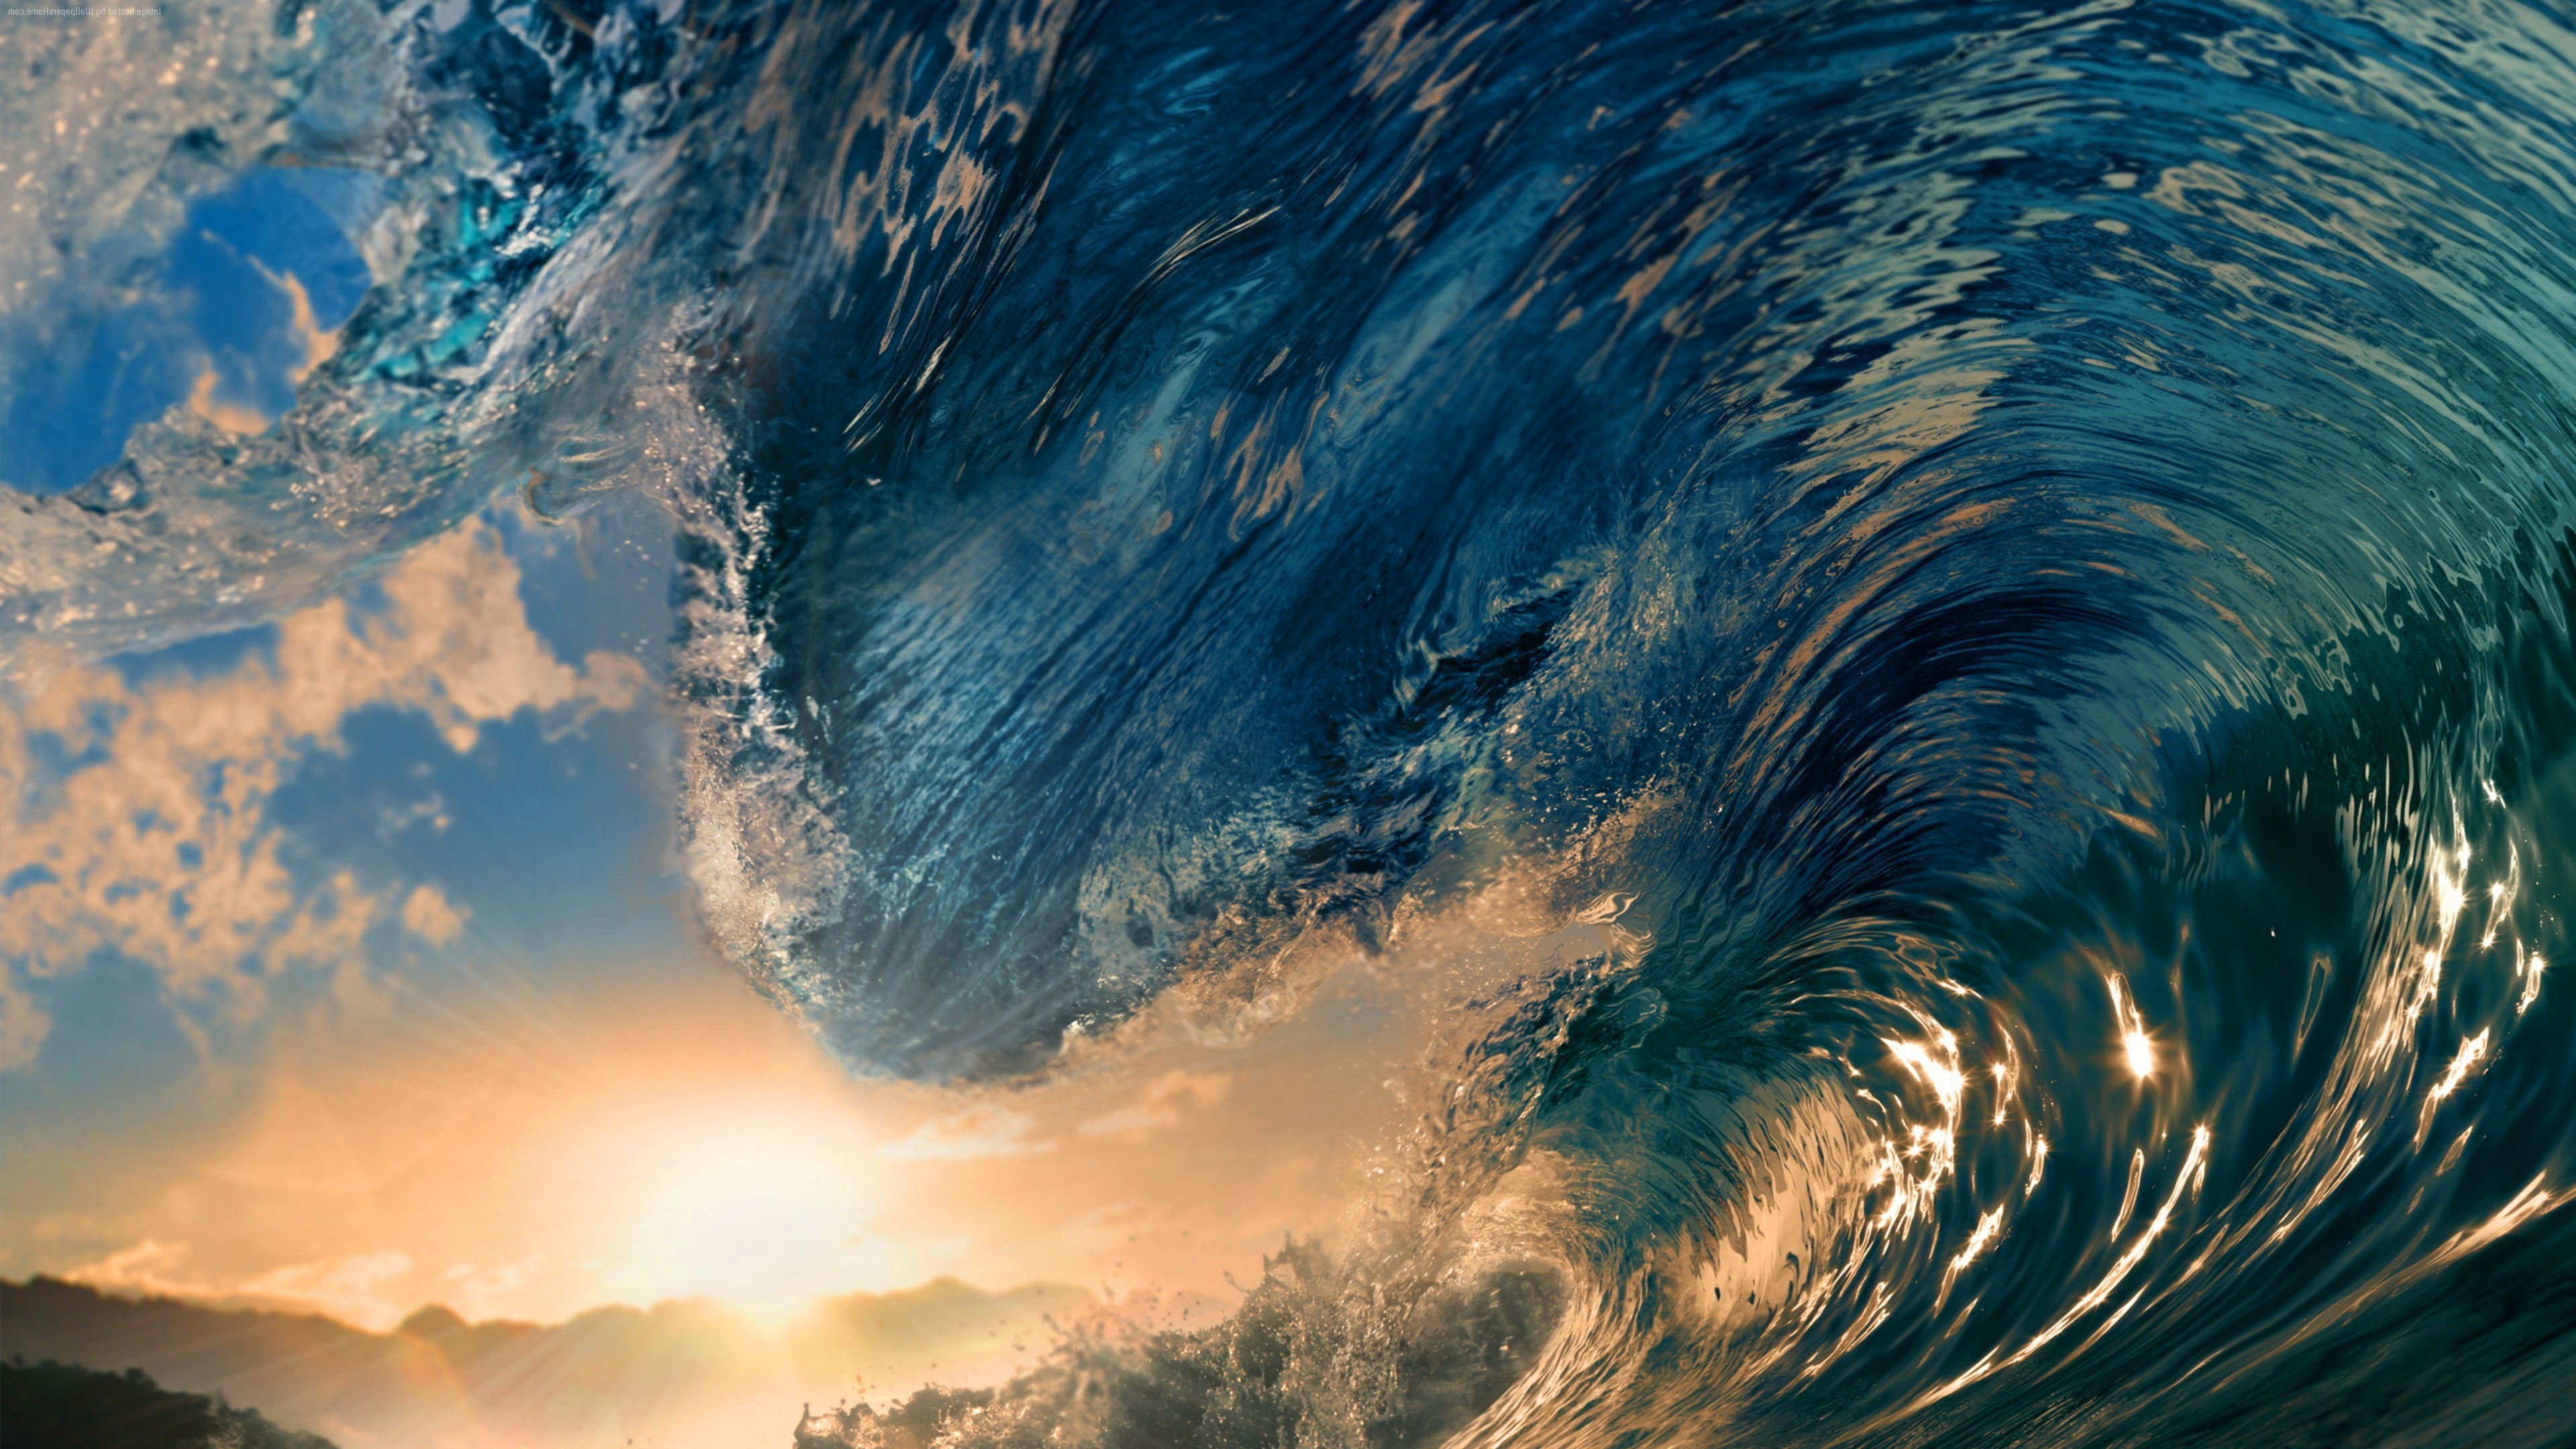 3840x2160 Ocean: Ocean Wave Tsunami Water Waves Big Wallpaper Iphone 6 for .